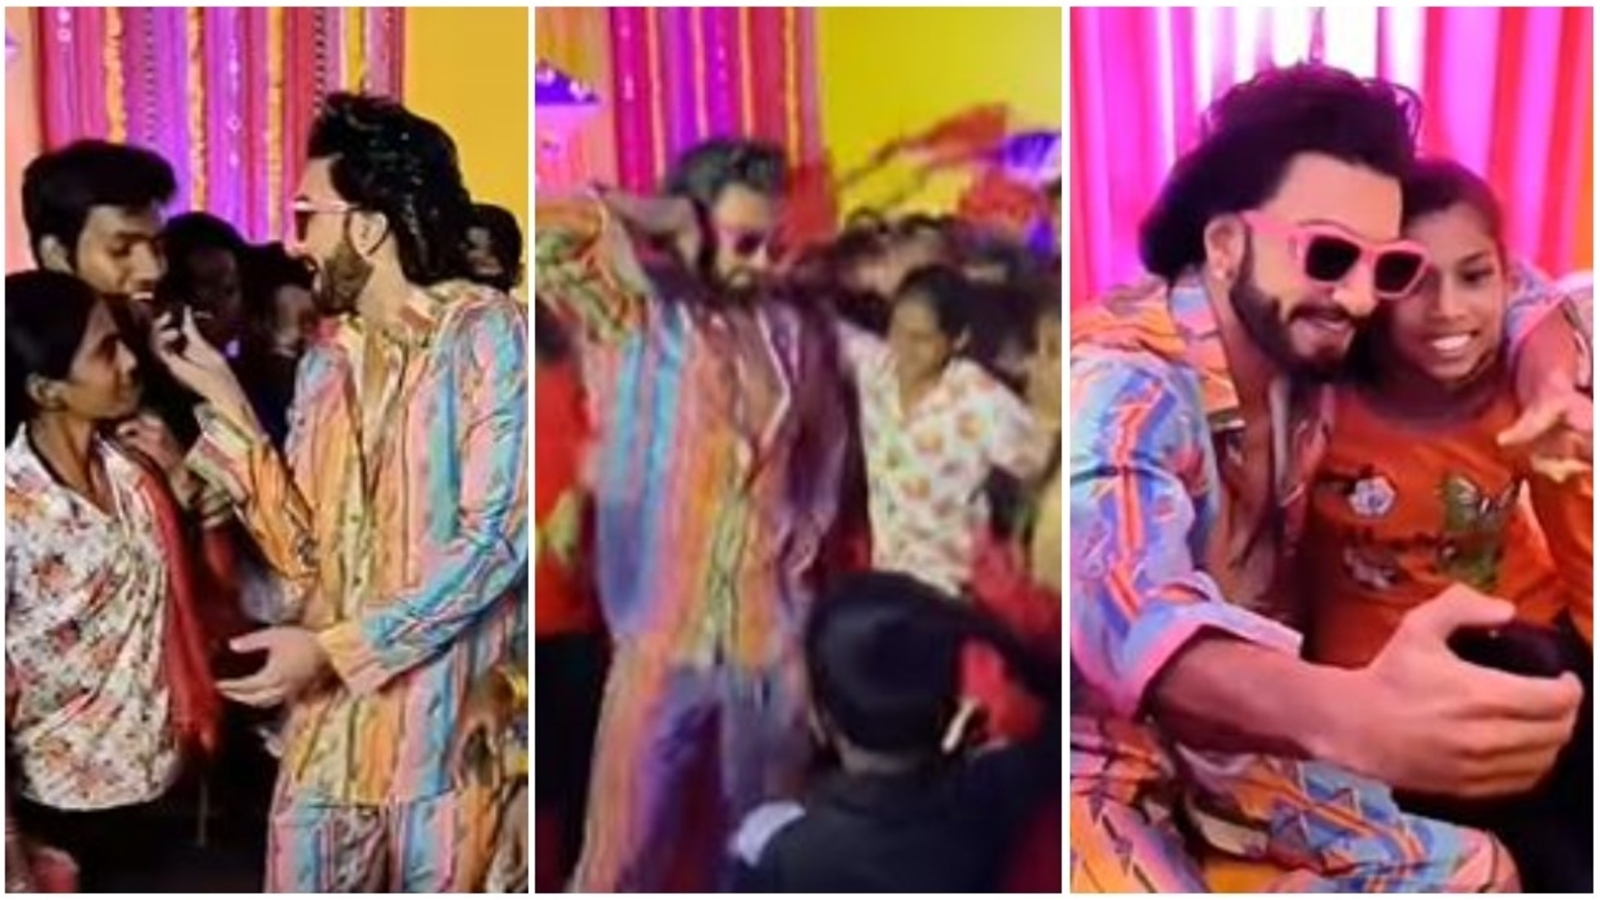 Ranveer Singh dances with children to Jayeshbhai Jordaar’s song, feeds them cake and clicks selfies. Watch